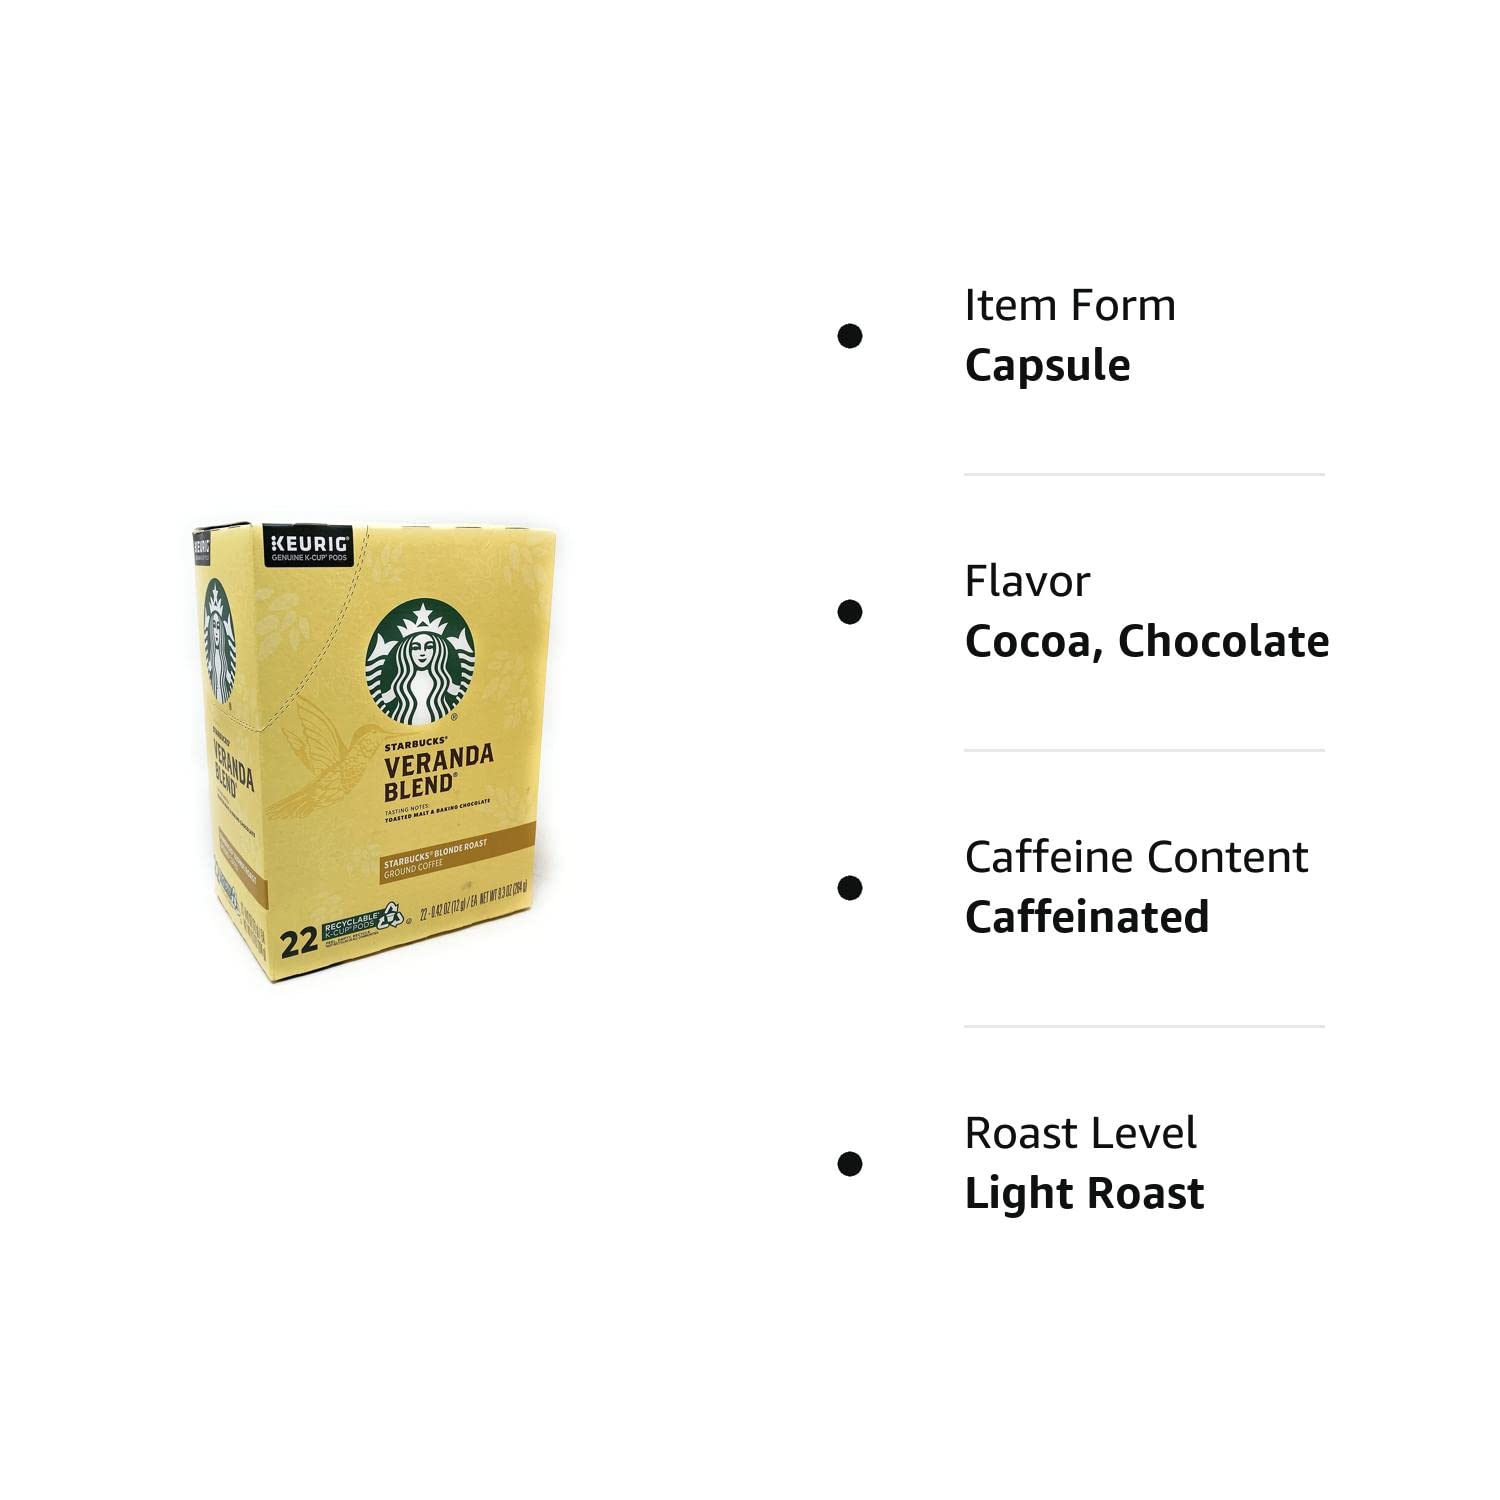 Starbucks Medium Roast K-Cup Coffee Pods — Breakfast Blend for Keurig Brewers — 1 box (40 pods)